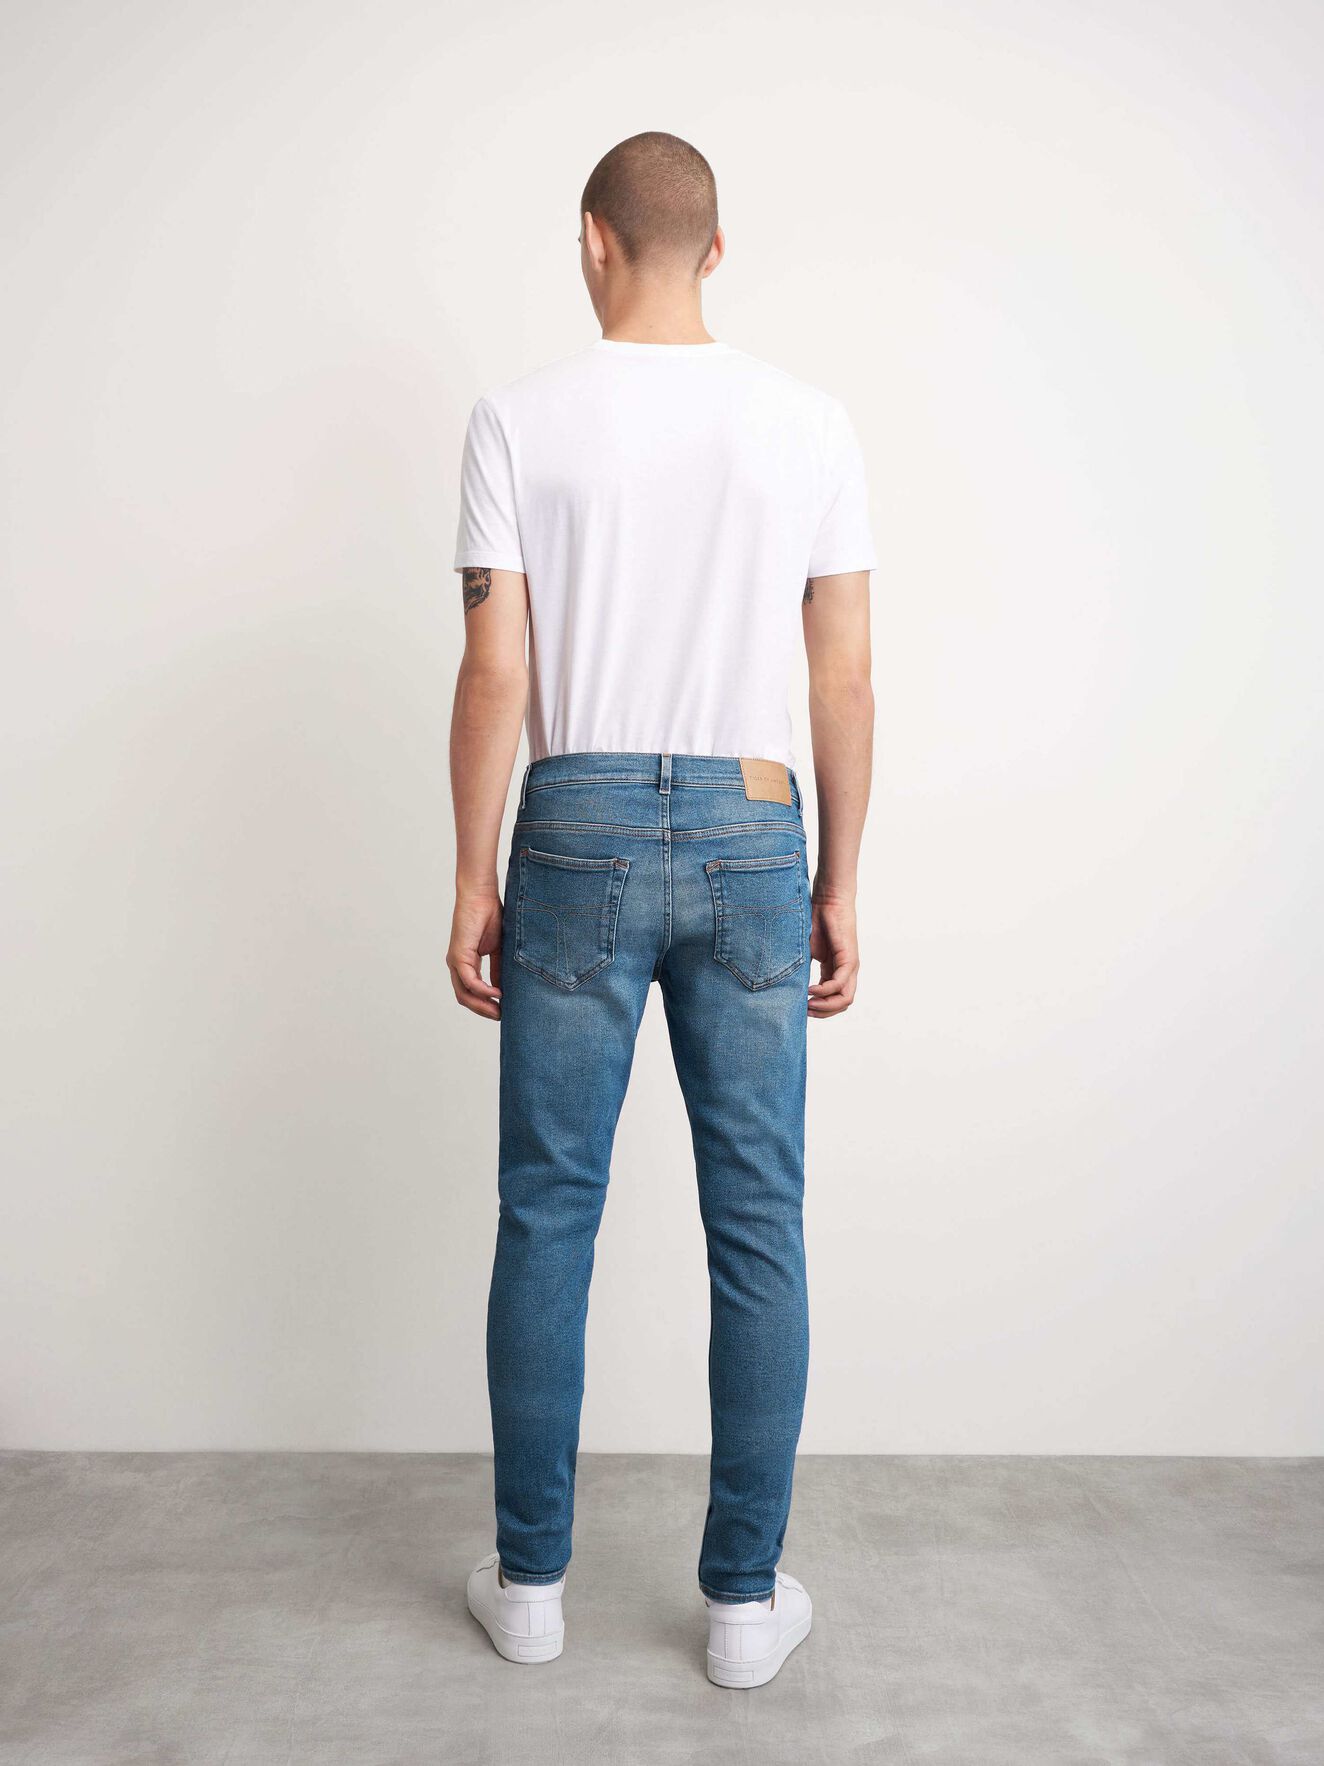 Evolve Jeans - Buy Jeans online